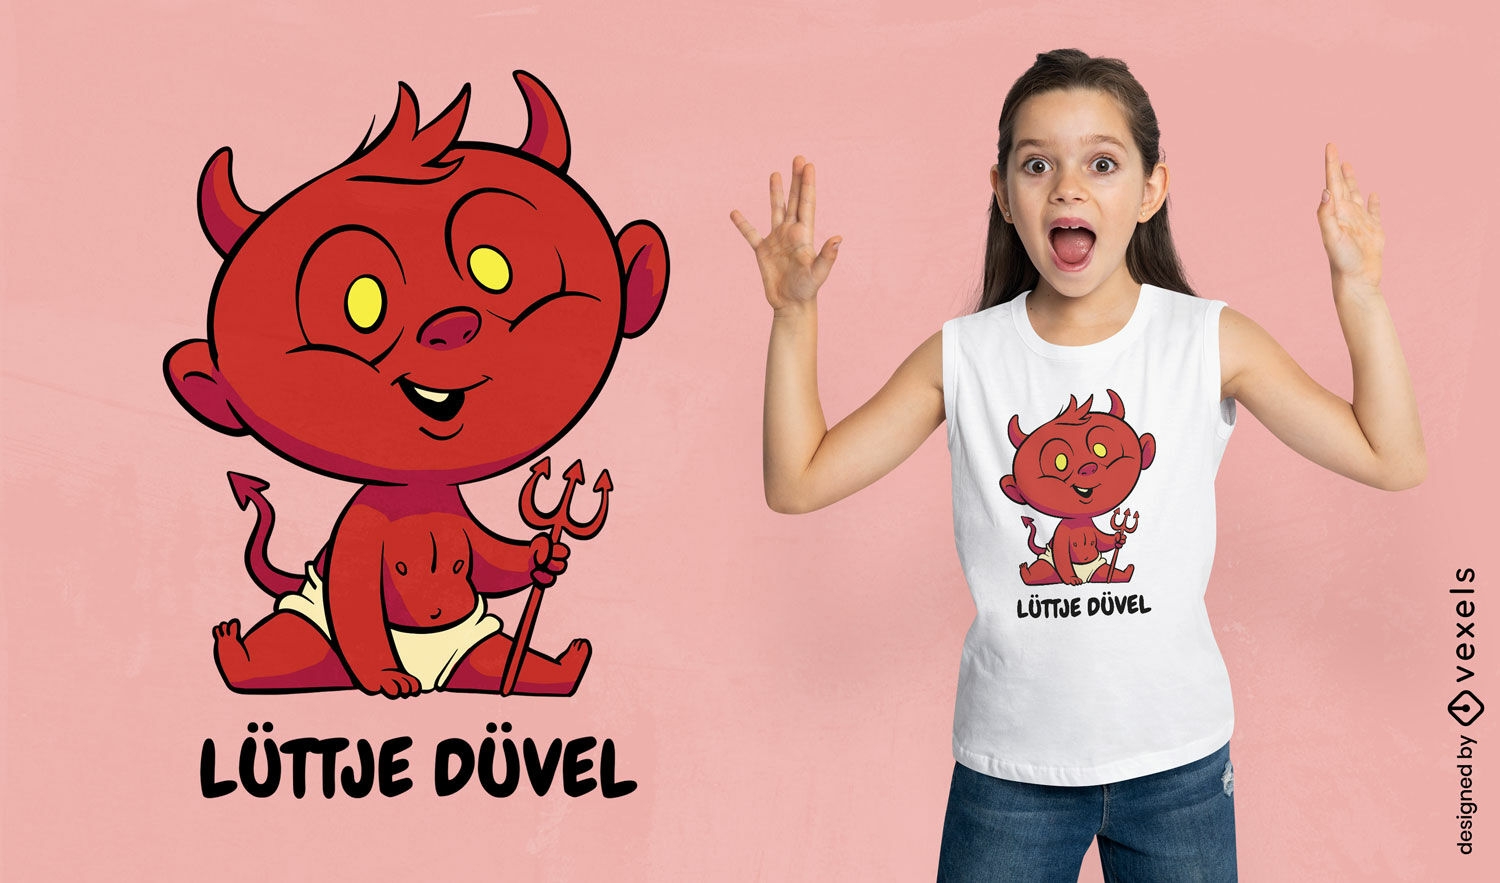 Baby devil t-shirt design